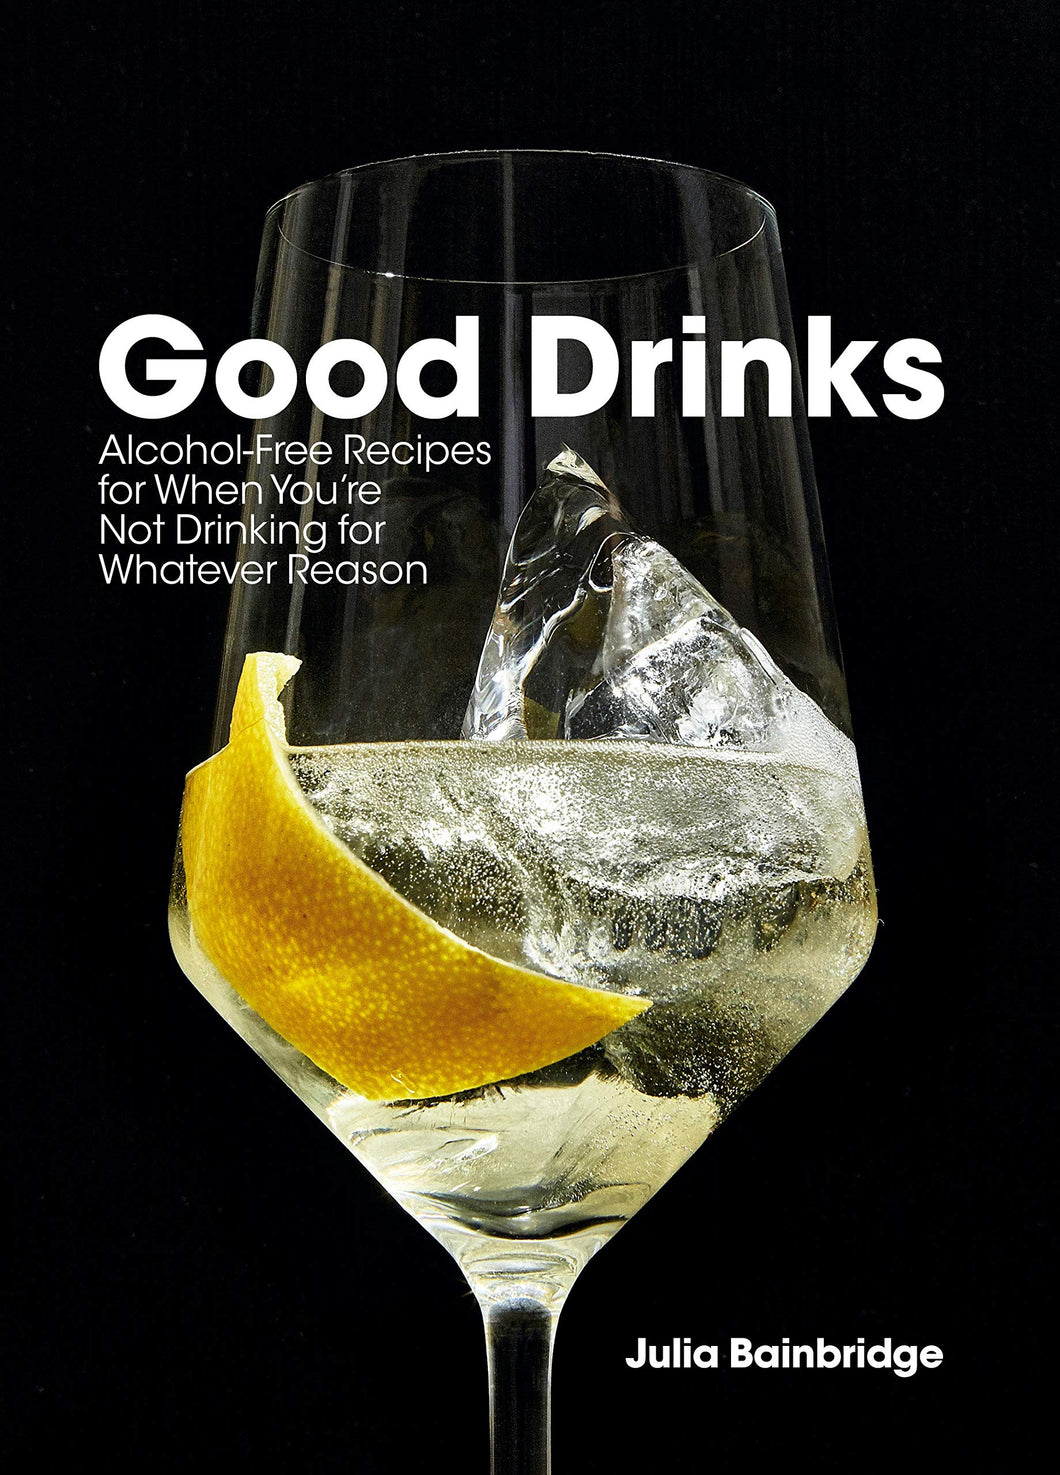 Good Drinks by Julia Bainbridge